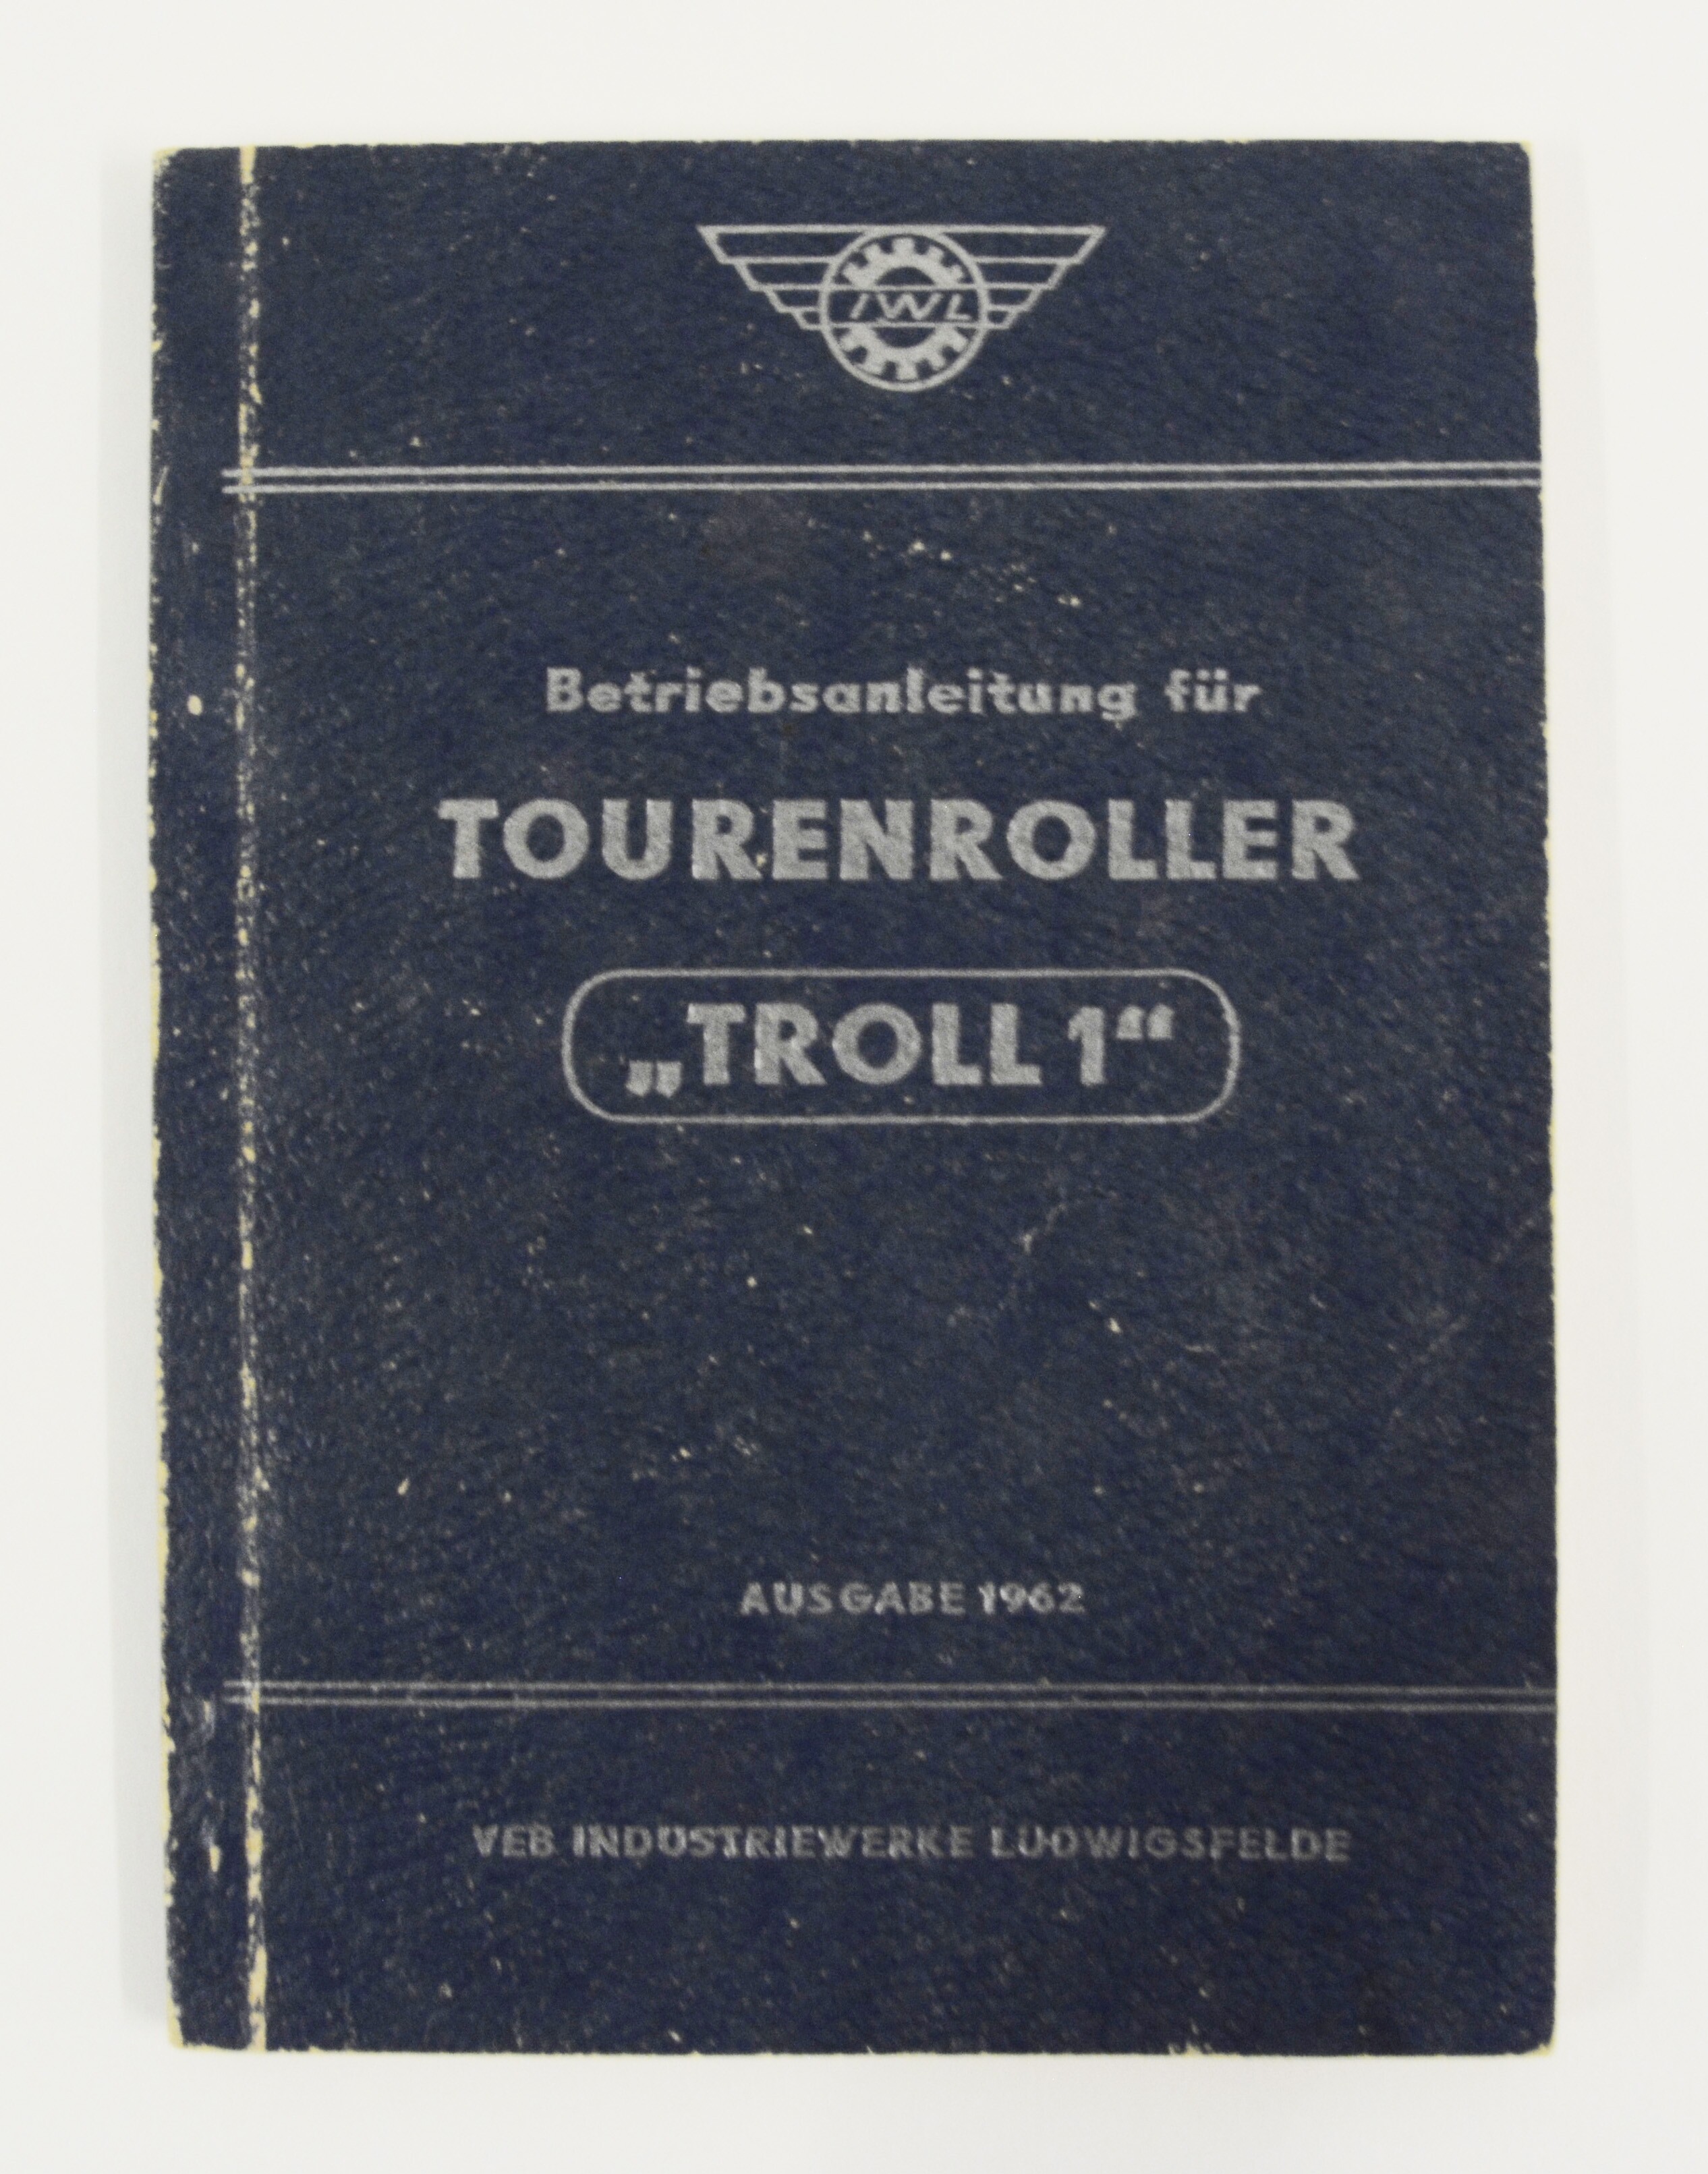 Betriebsanleitung für Tourenroller "Troll 1" (Stadt- und Technikmuseum Ludwigsfelde CC BY-NC-SA)